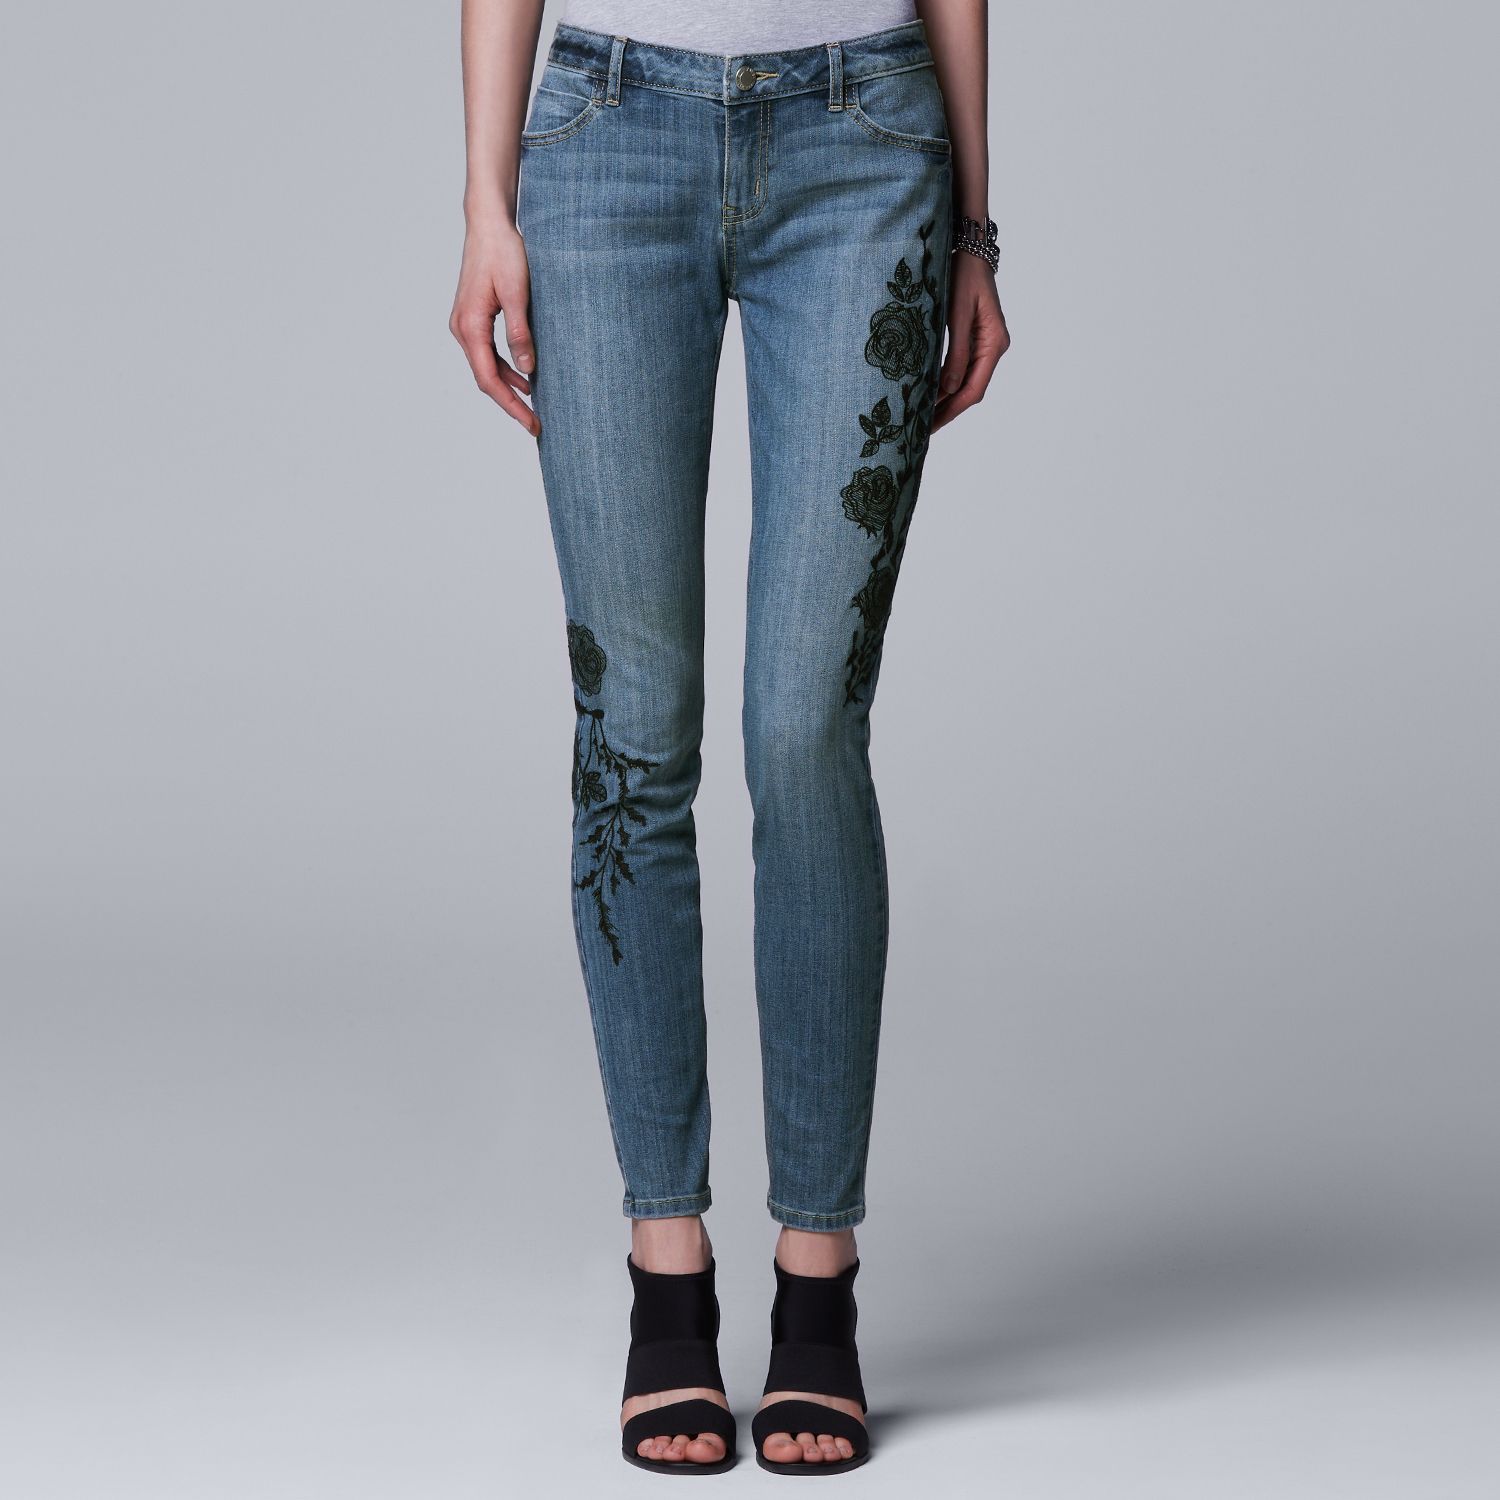 vera wang skinny jeans kohls